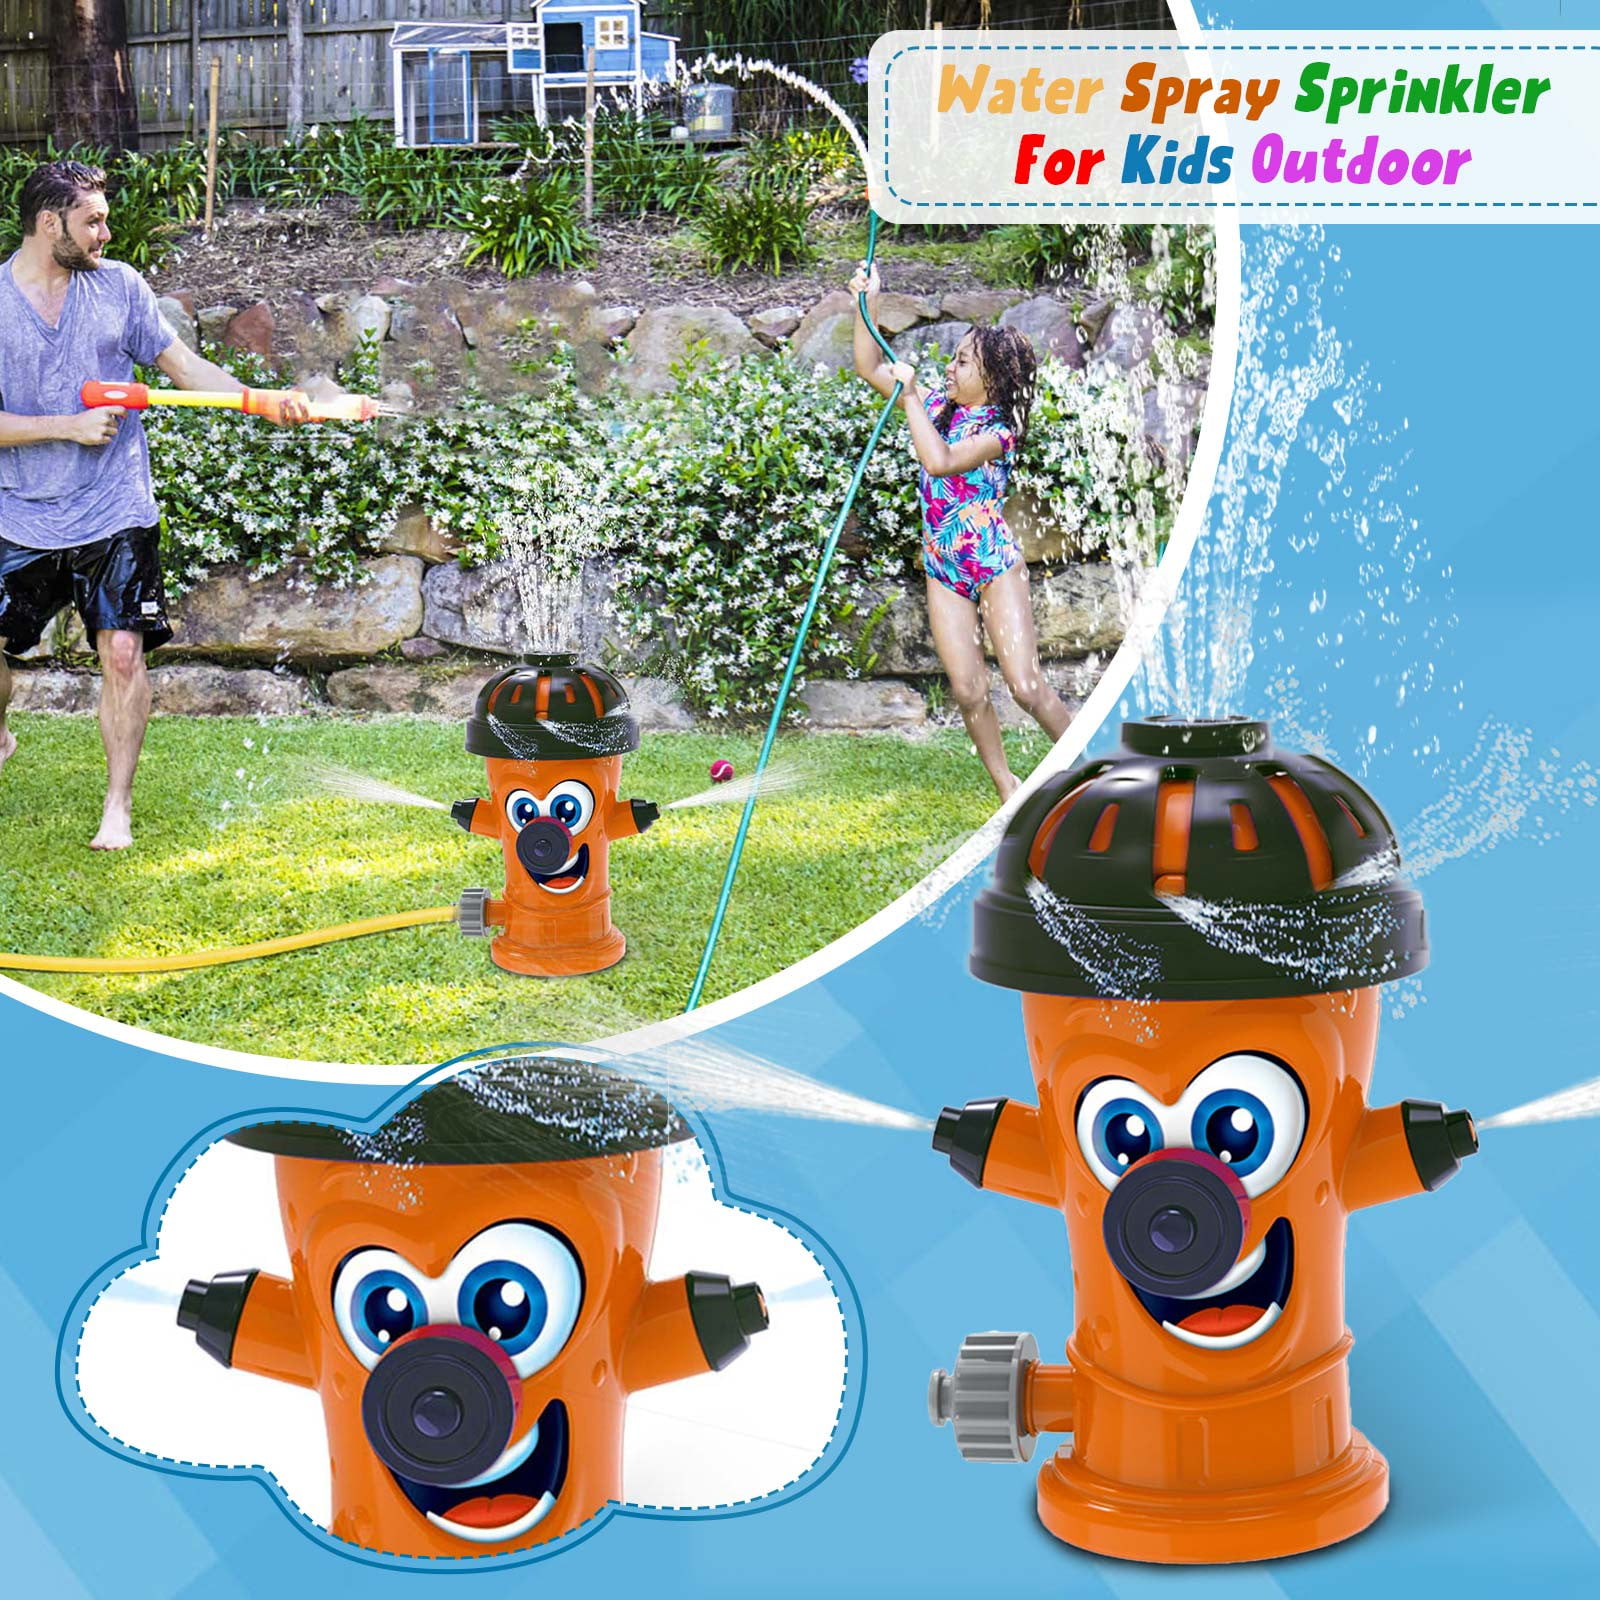 Outdoor Fun Toy Swimming Party Beach Pool Play Caterpillar Water Sprayer Sprinkler for Kids Children